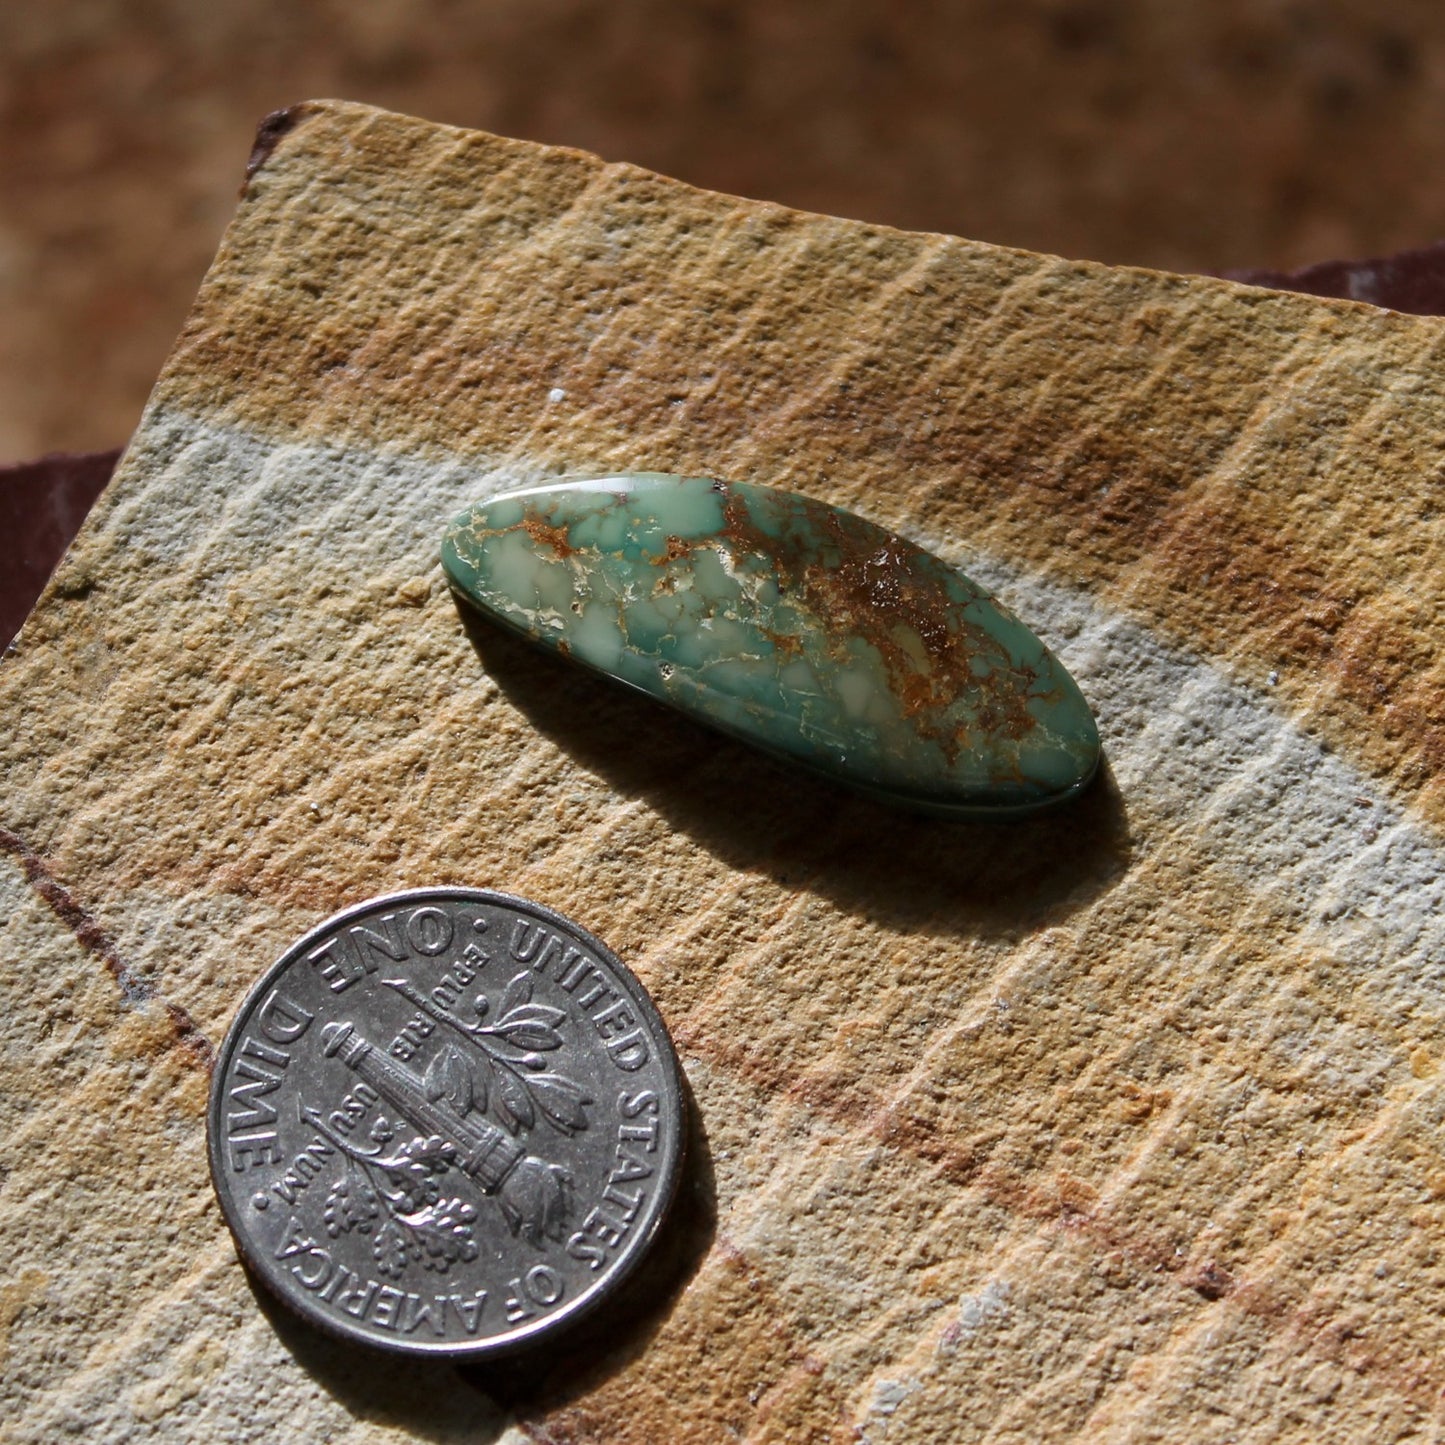 5.8 carat elongated green Stone Mountain Turquoise cabochon